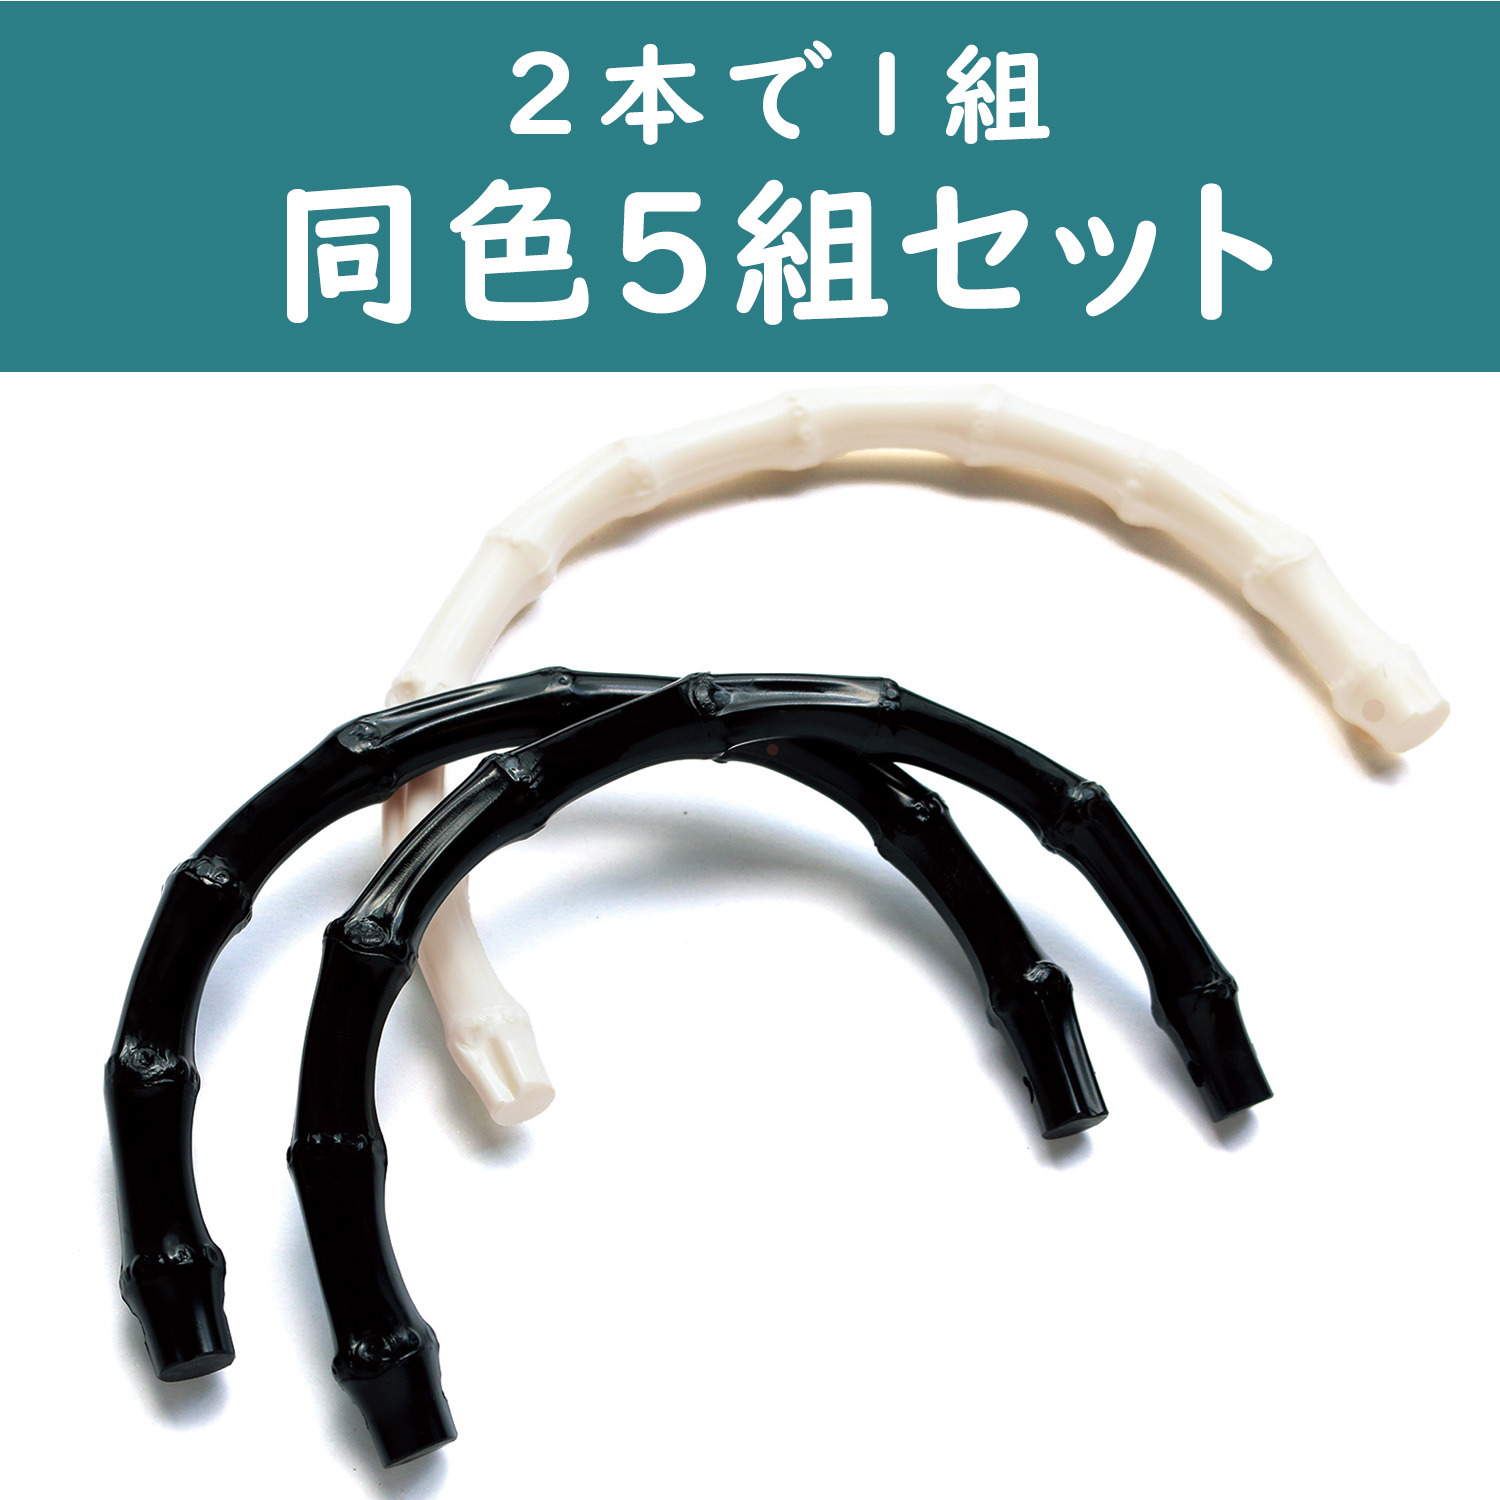 TYP201-5　Plastic bamboo handle　2pcs/1pair×5 set of same color/pack (set)